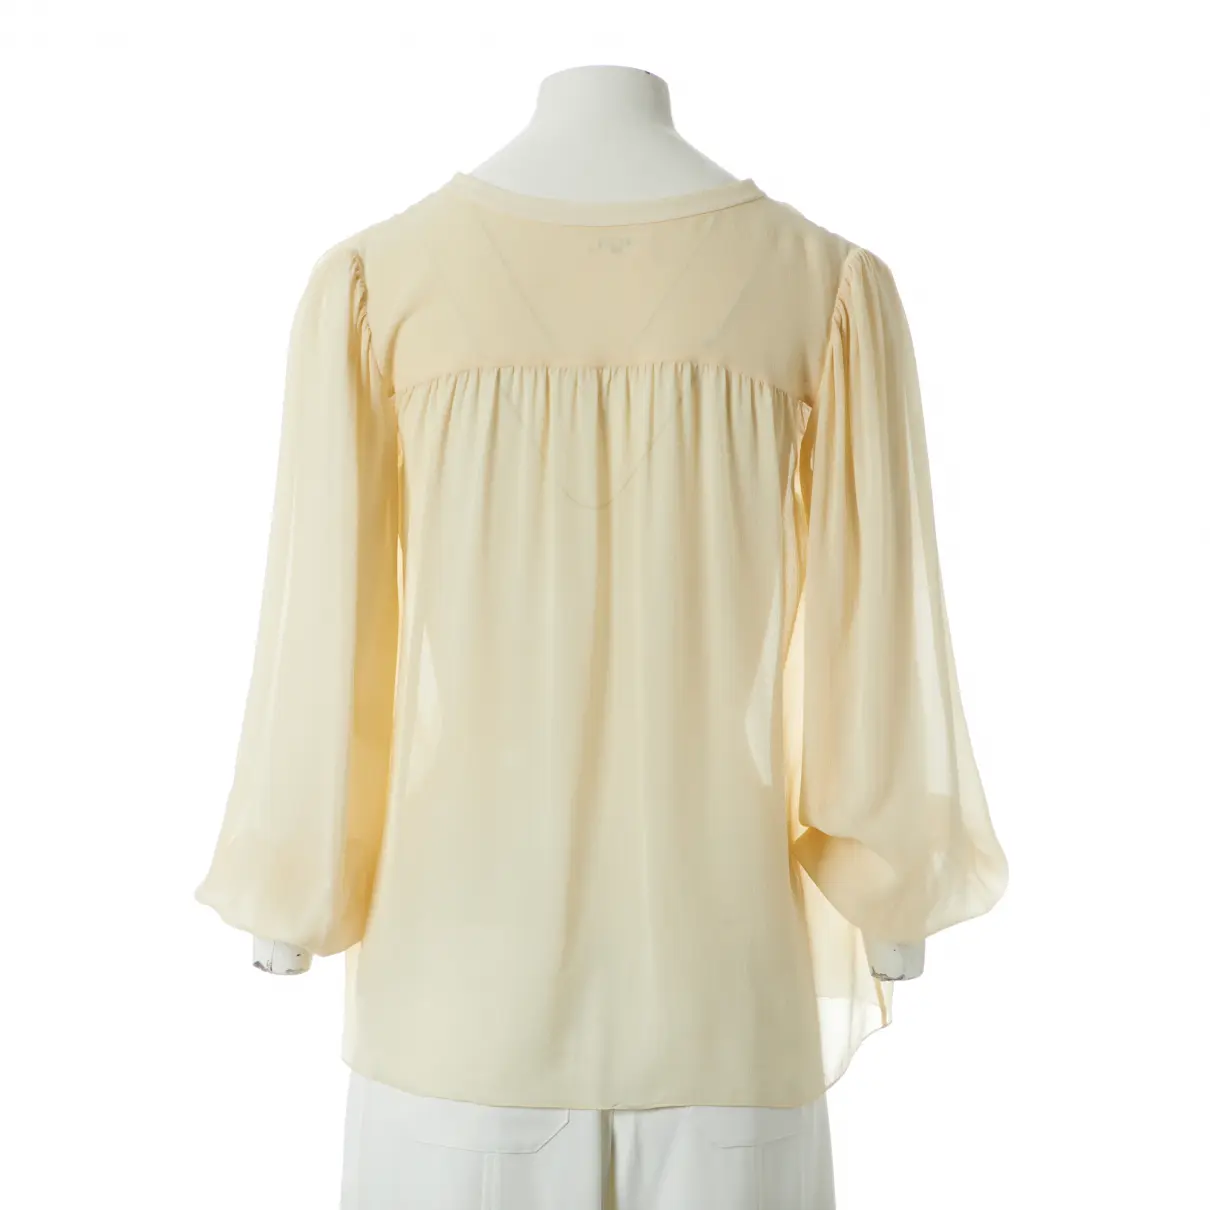 Buy Celine Silk blouse online